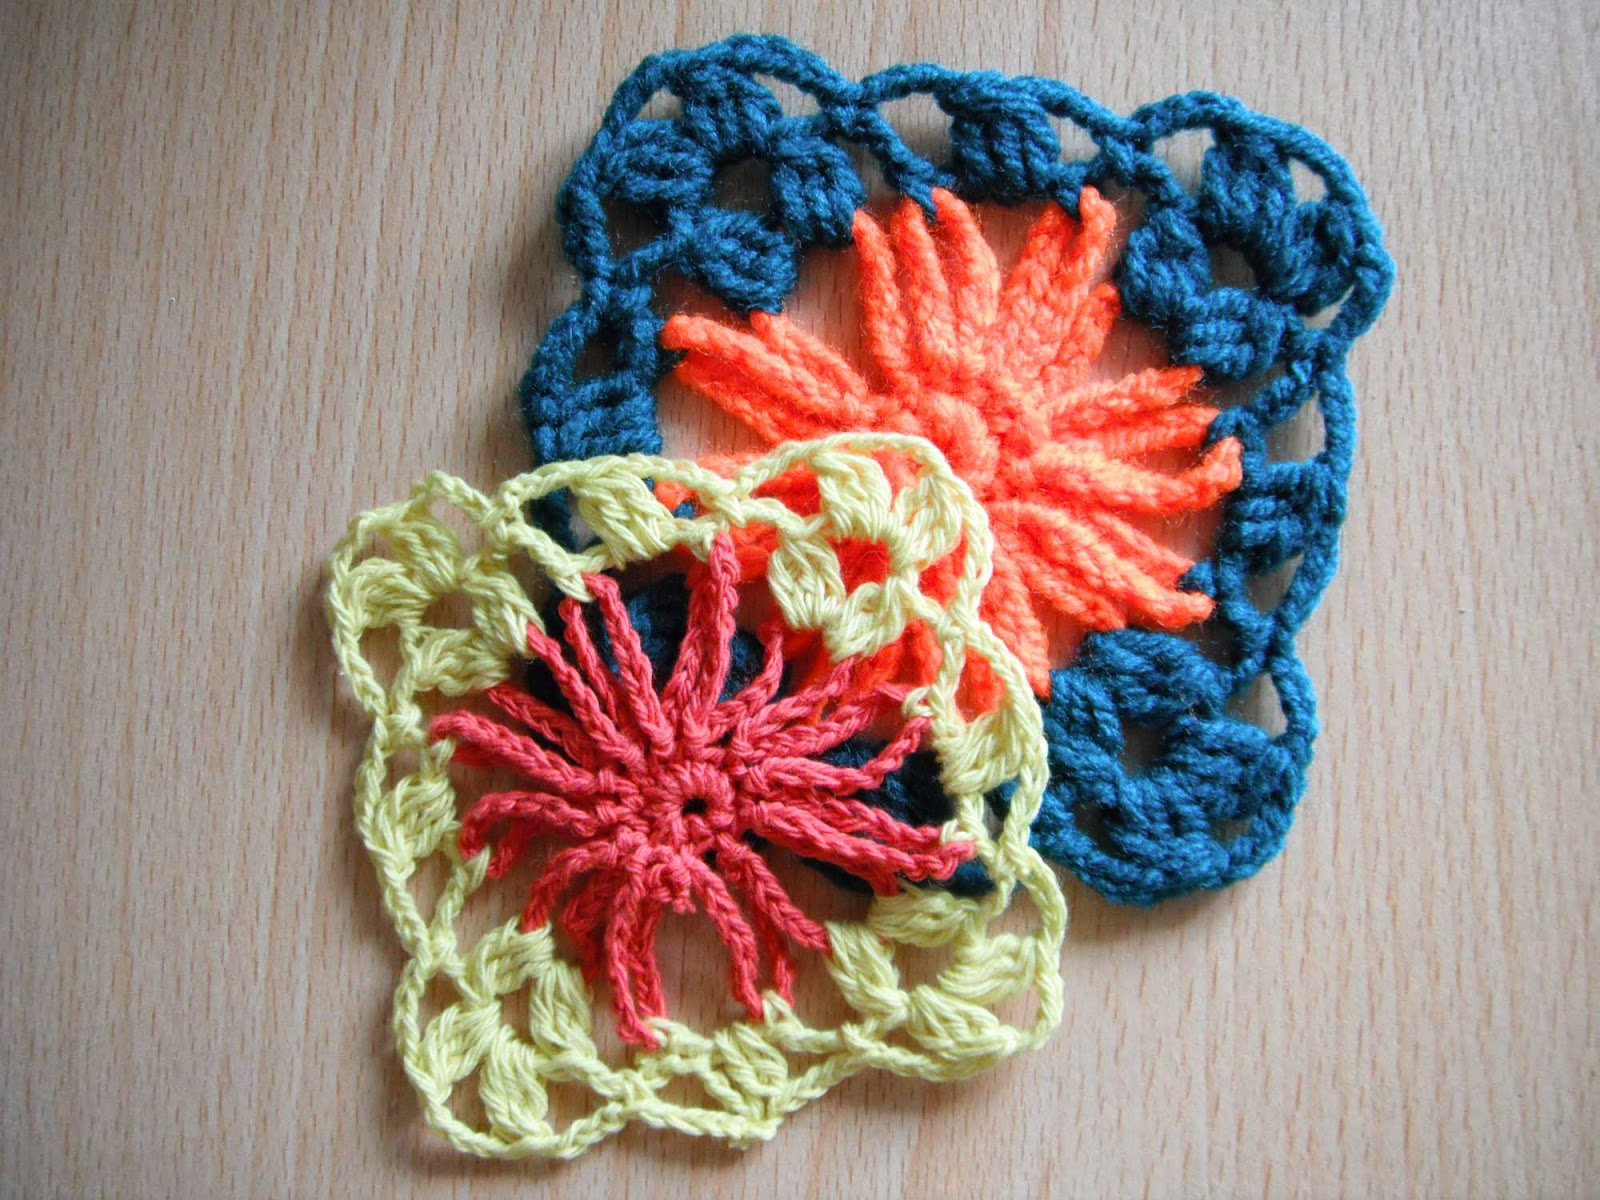 How To Follow A Crochet Pattern Free Crochet Patterns And Video Tutorials How To Crochet Motif